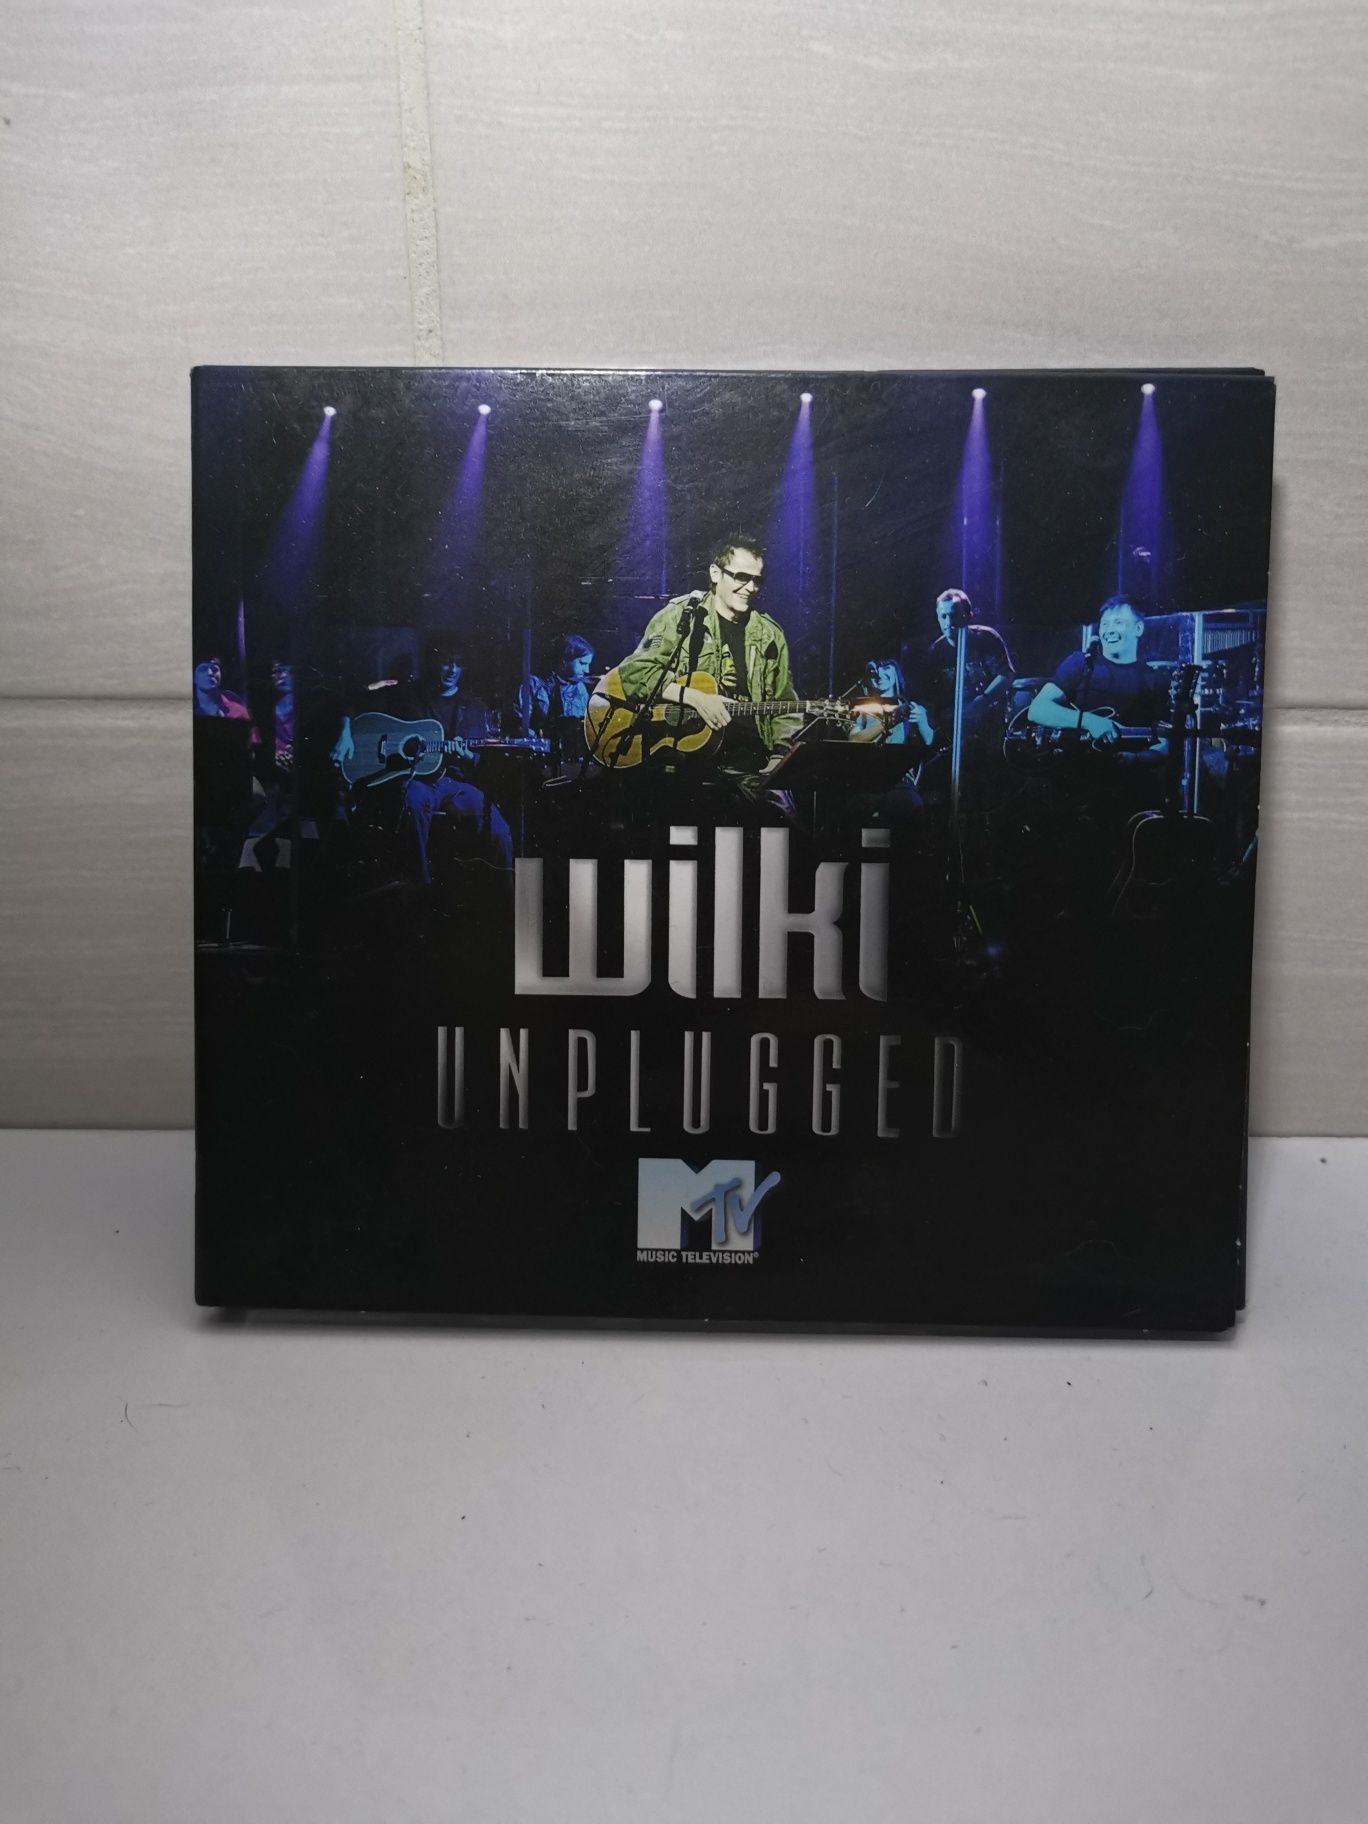 Płyta "Wilki" unplugged